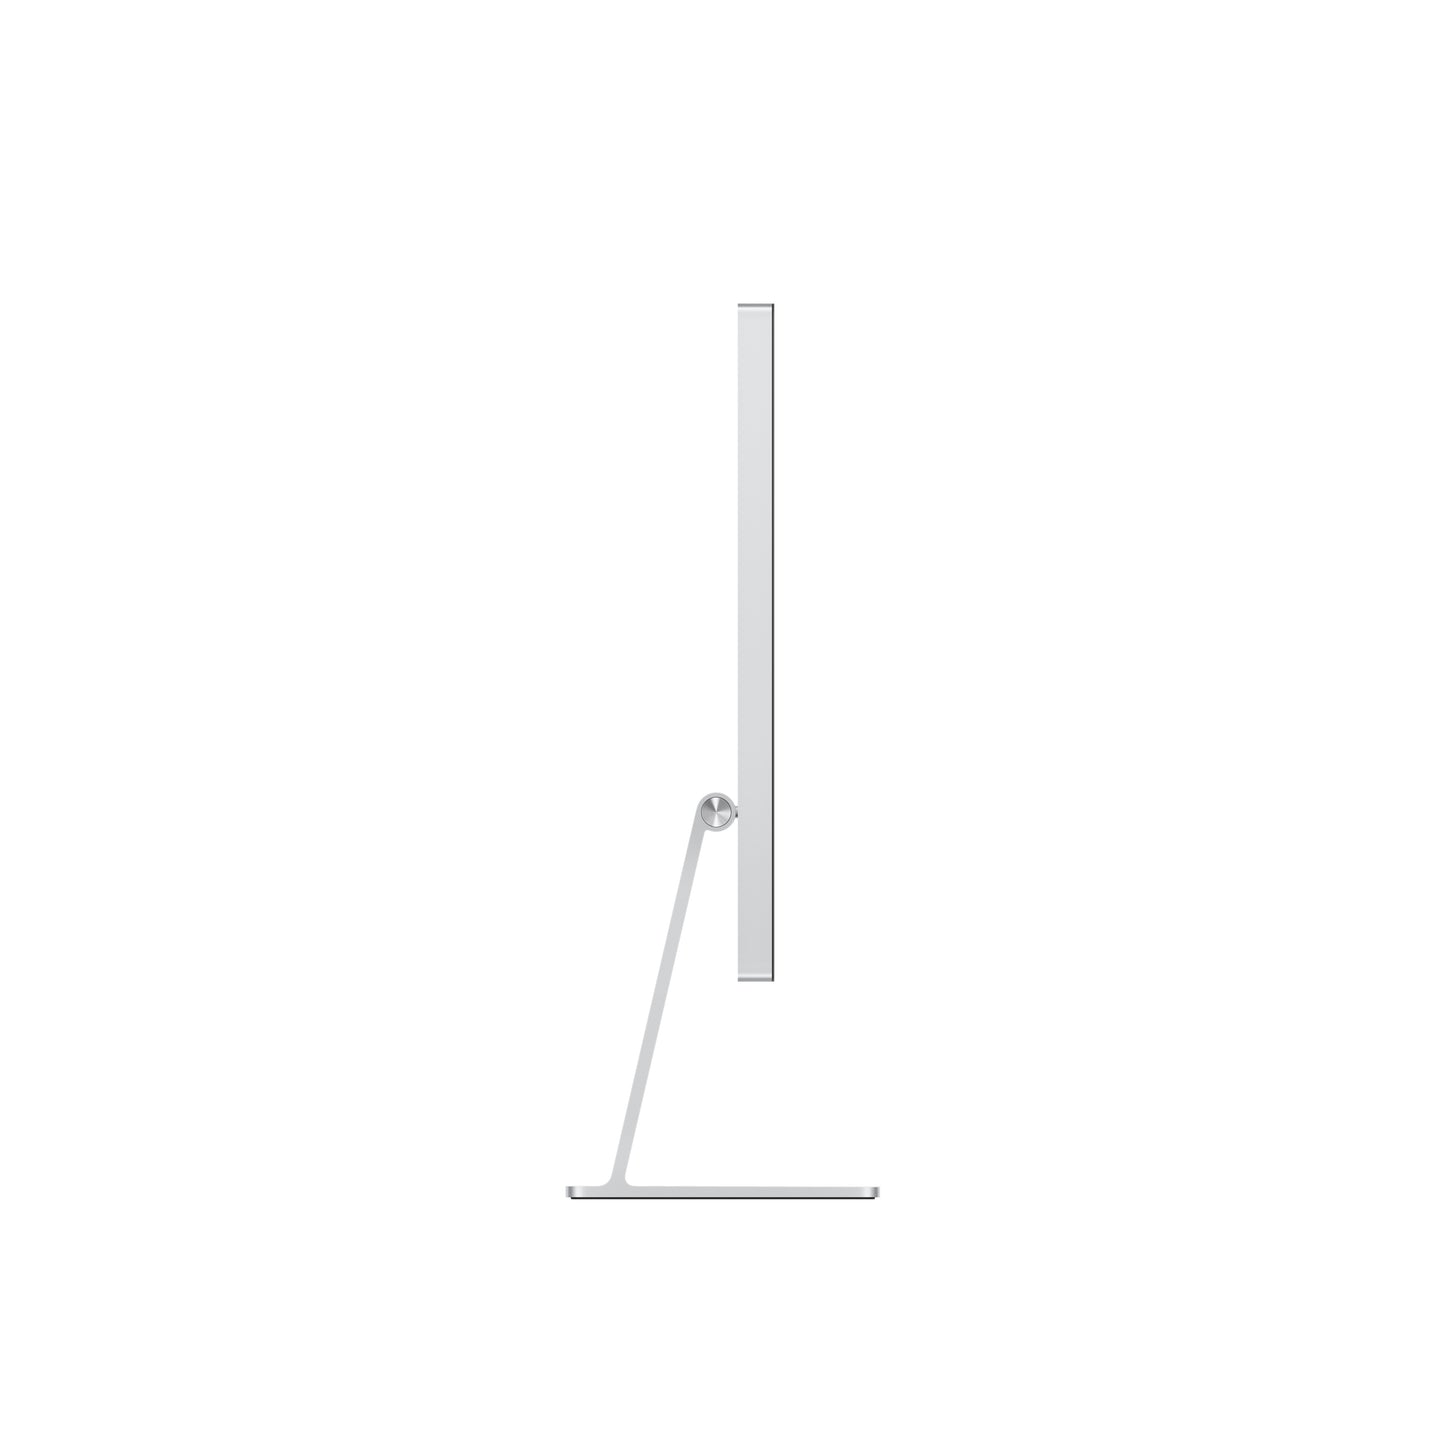 Apple Studio Display - Standardglas - VESA Mount Adapter (ohne Standfuß)